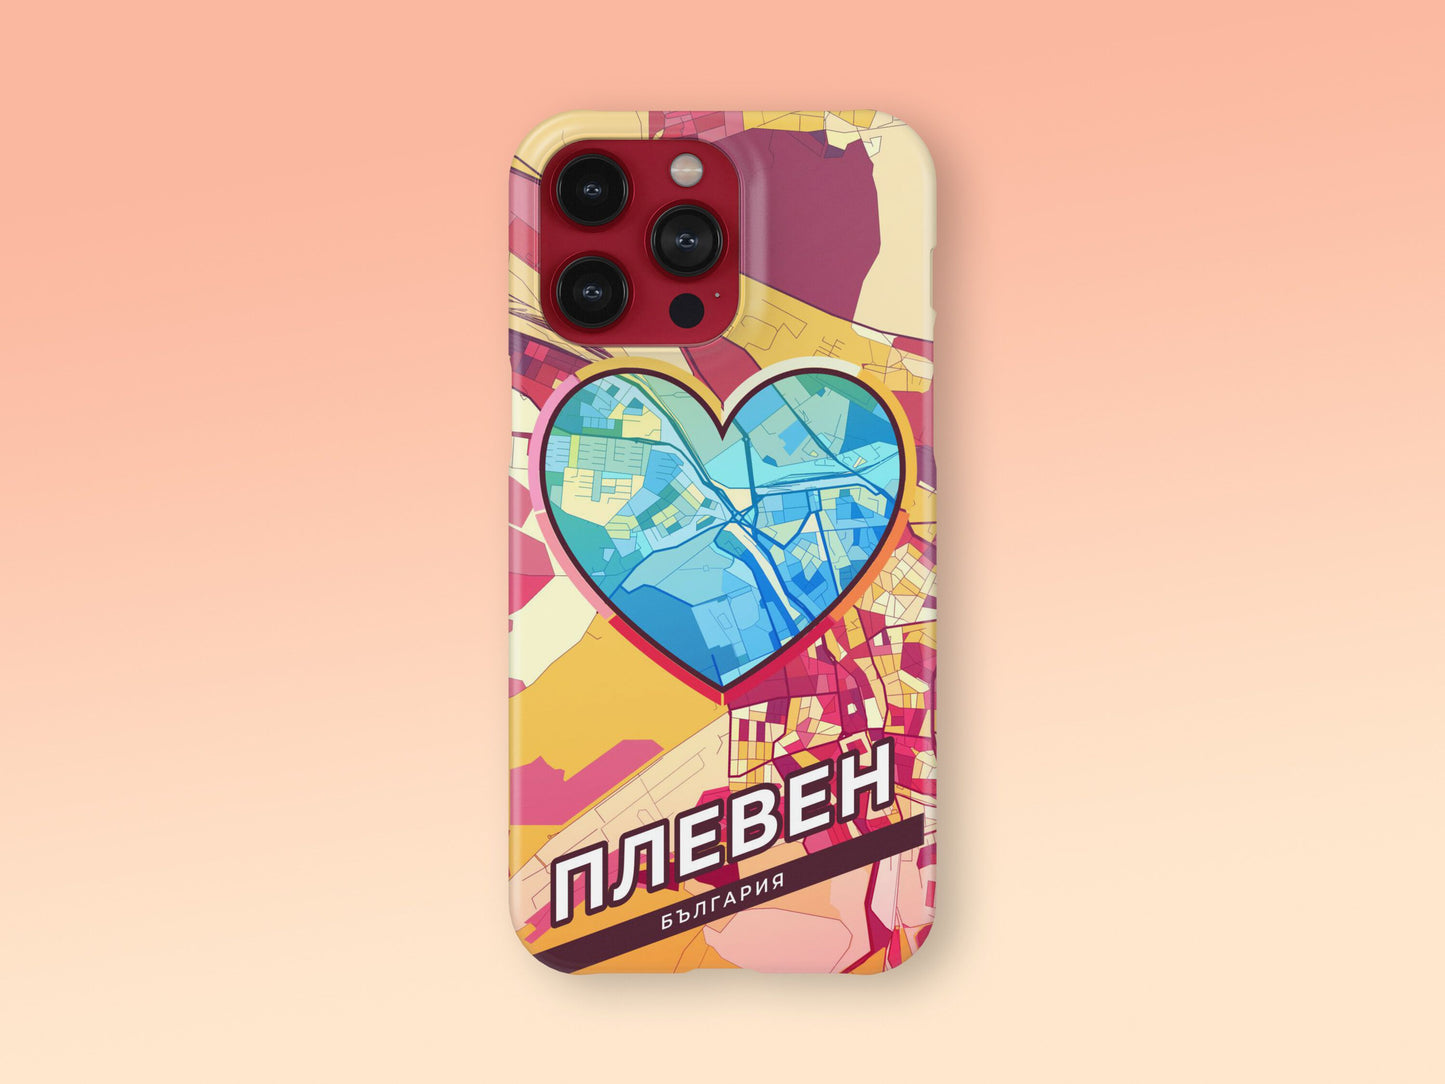 Плевен България slim phone case with colorful icon. Birthday, wedding or housewarming gift. Couple match cases. 2